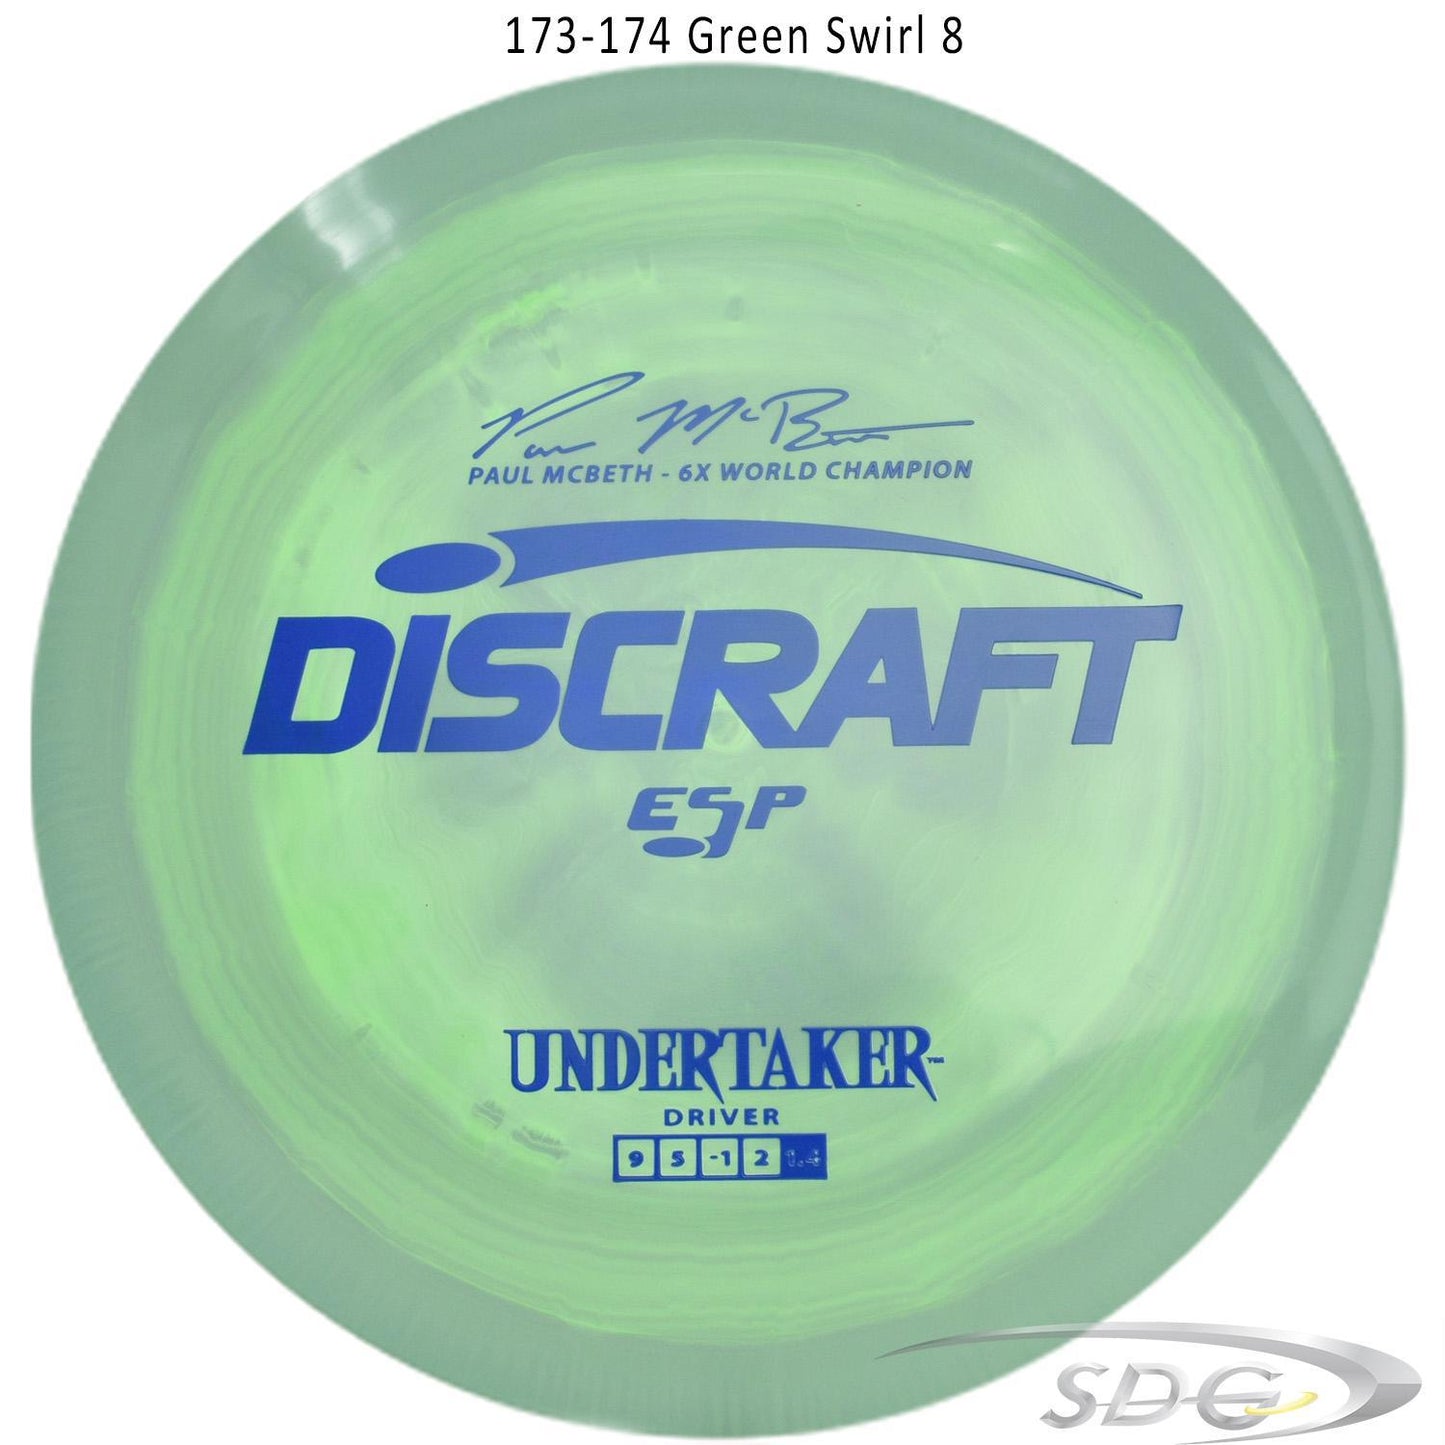 discraft-esp-undertaker-6x-paul-mcbeth-signature-series-disc-golf-distance-driver-176-173-weights 173-174 Green Swirl 8 